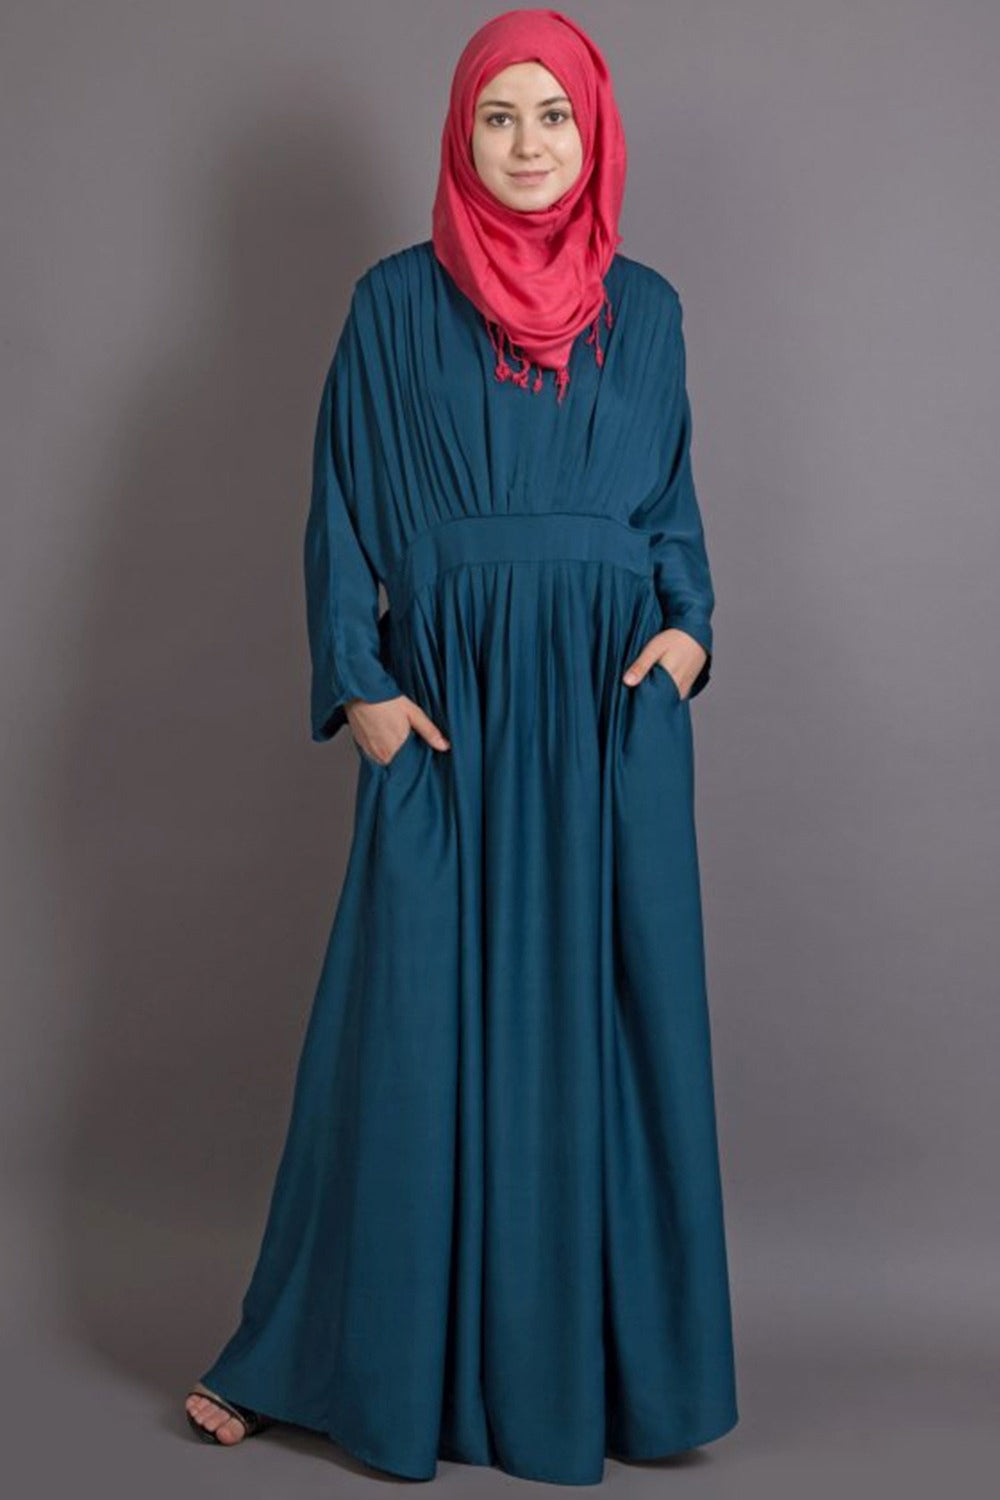 Buy Polycrepe Solid Abaya in Teal